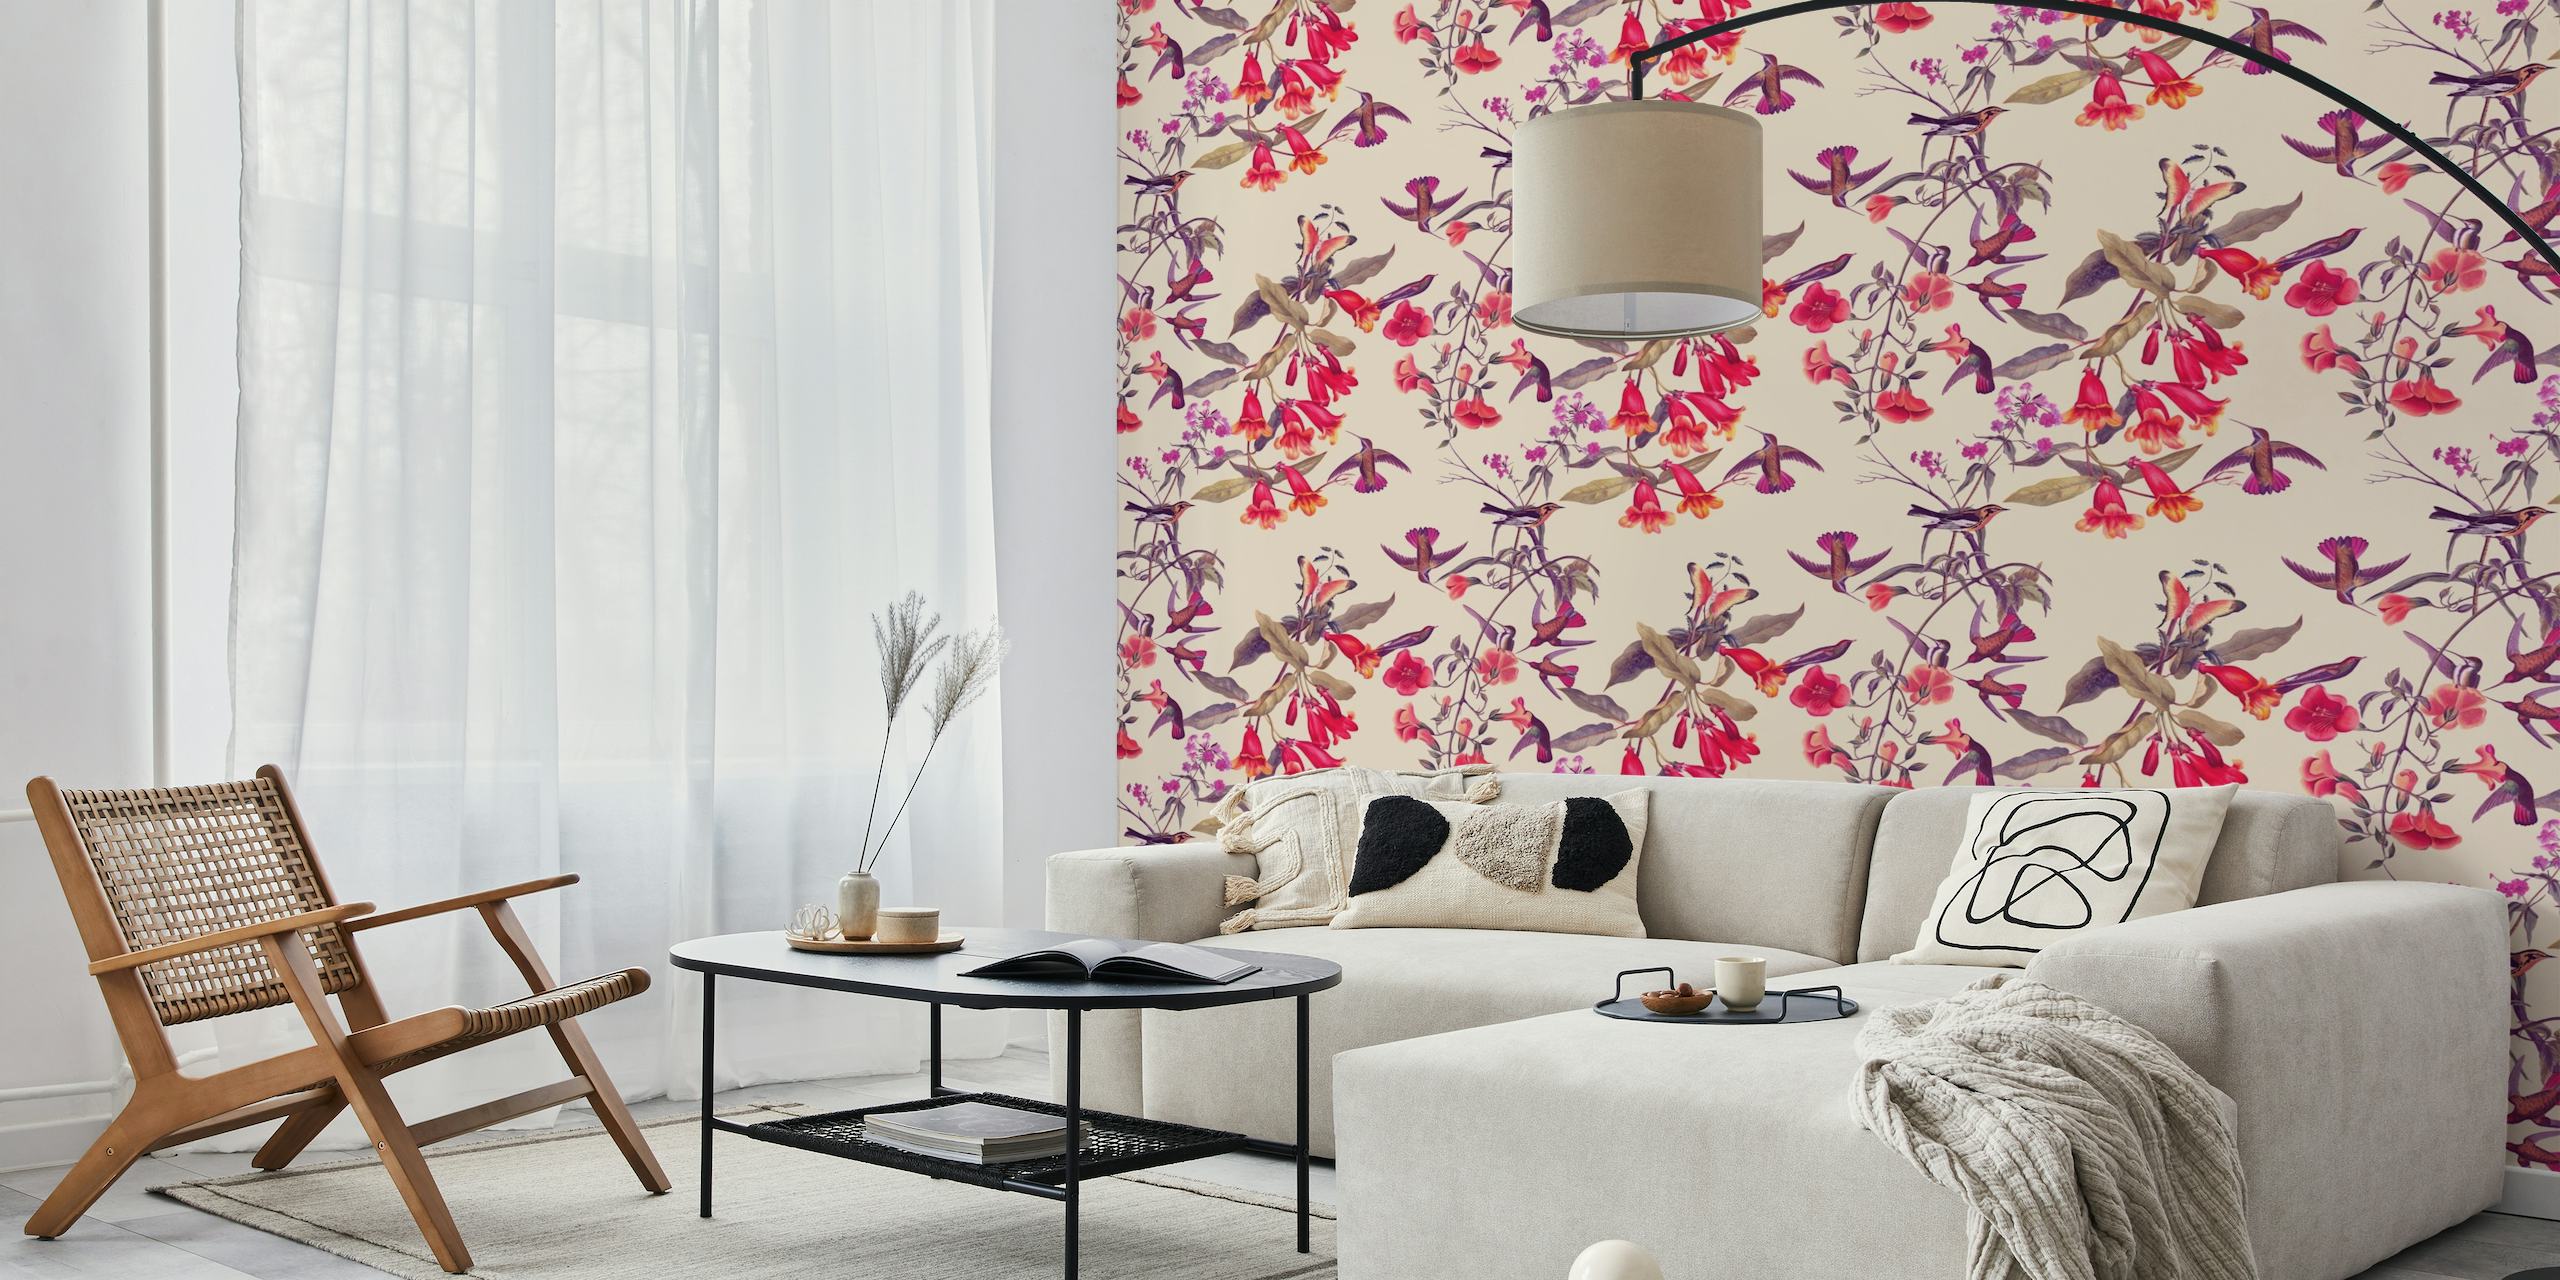 Cheerful Floral Hummingbirds wallpaper